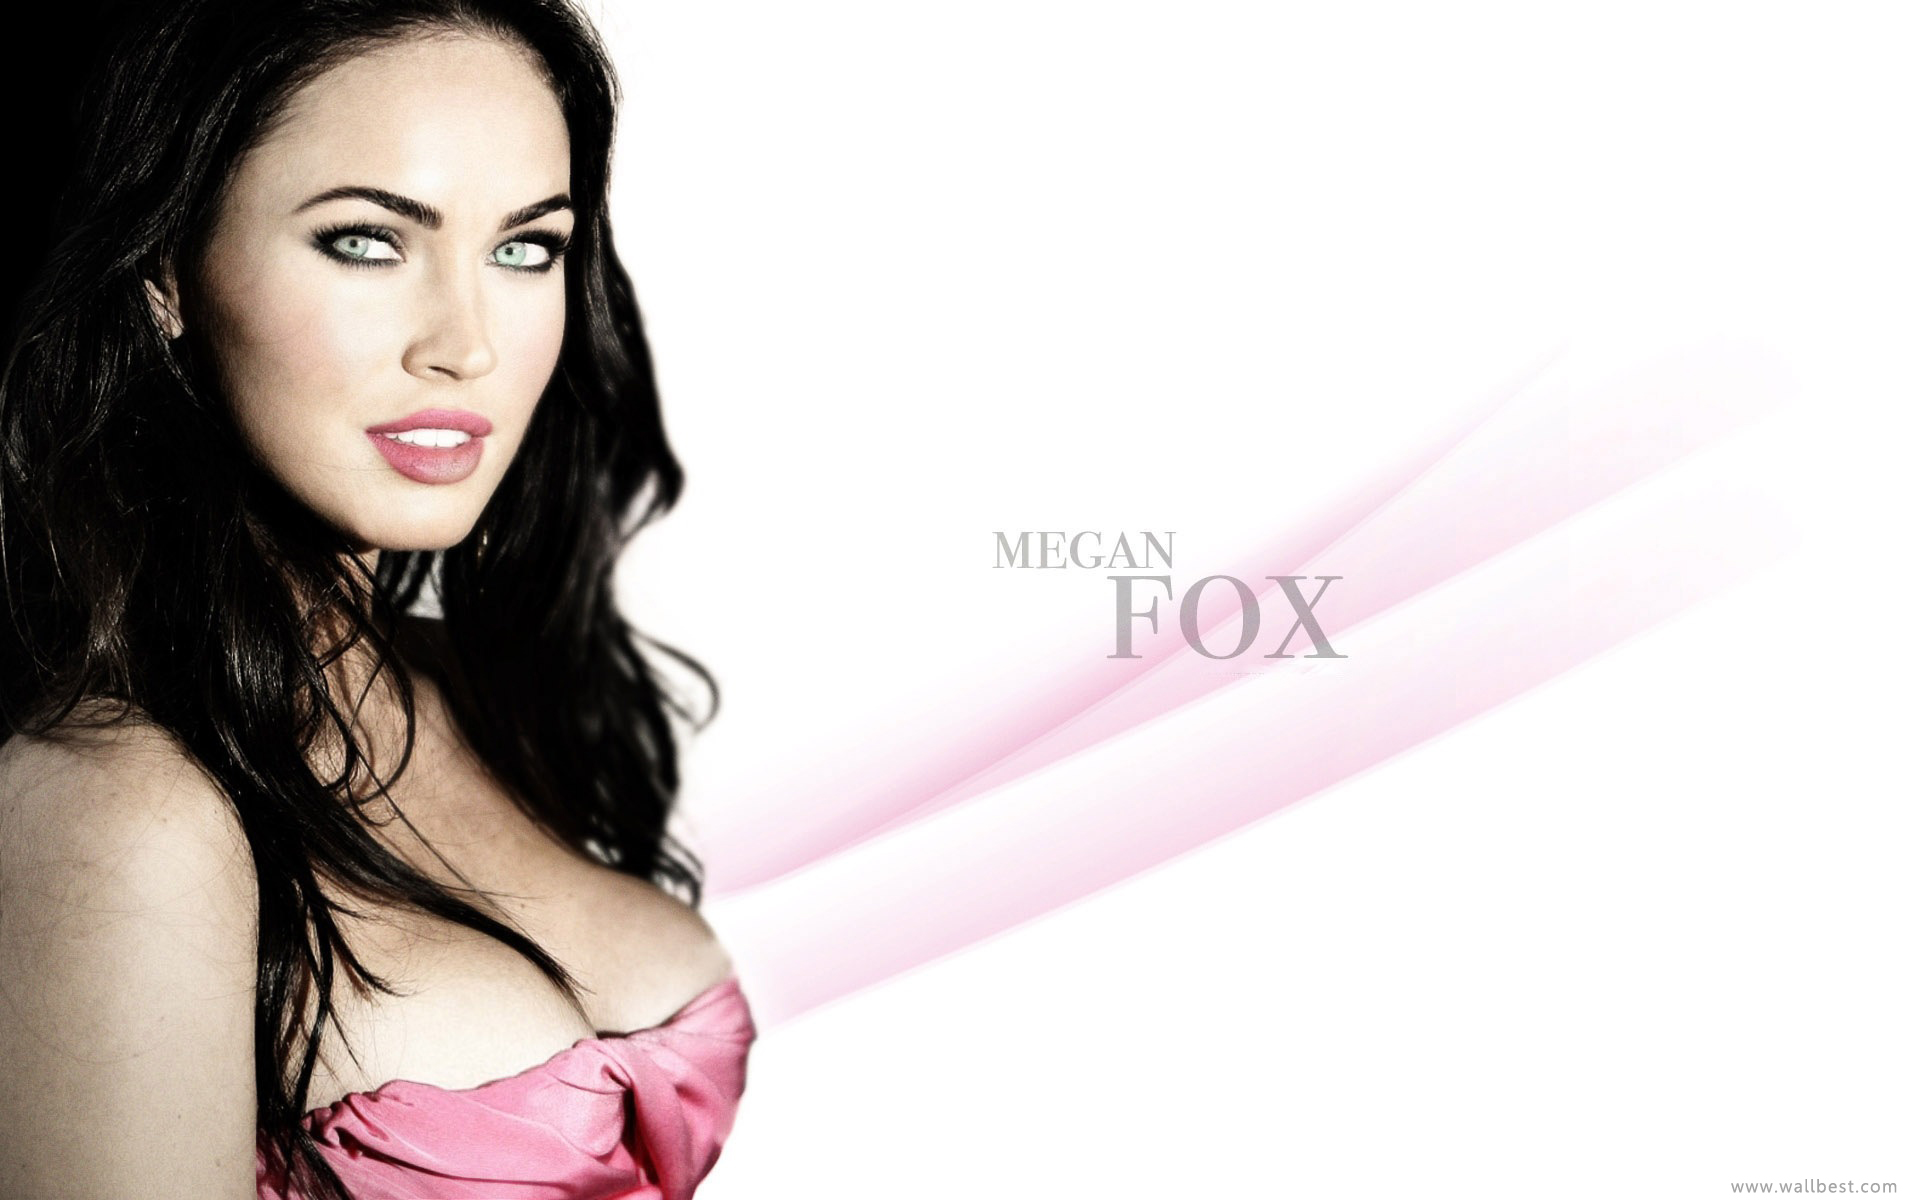 Celebrity Megan Fox Wallpaper For Desktop